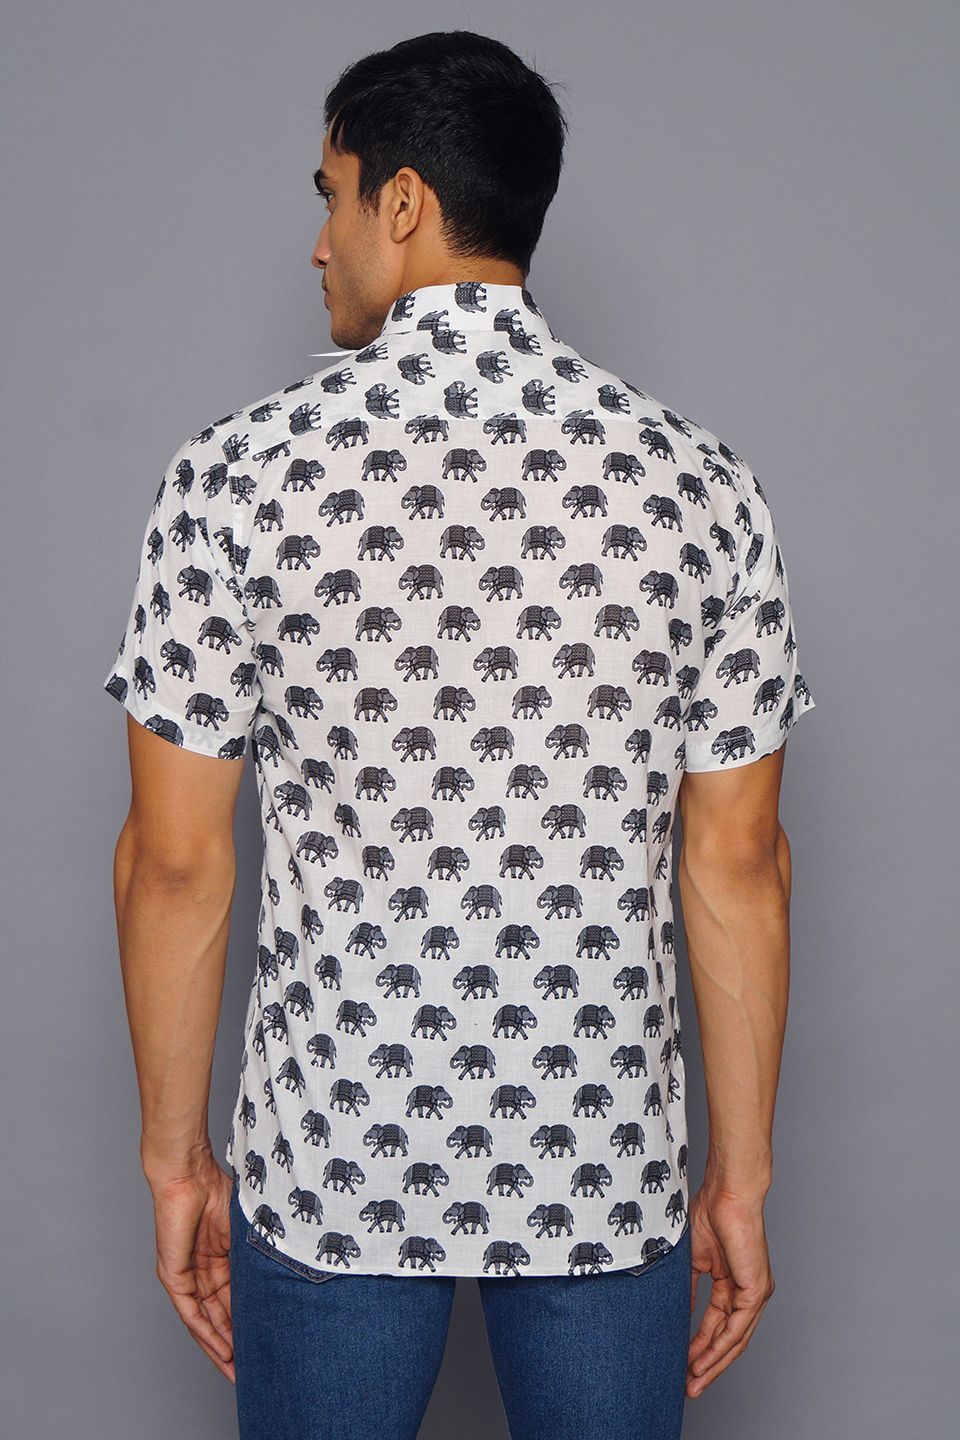 Wintage Men's Jaipur Black Elephant Print Cotton Tropical Hawaiian Batik Casual Shirt -Black